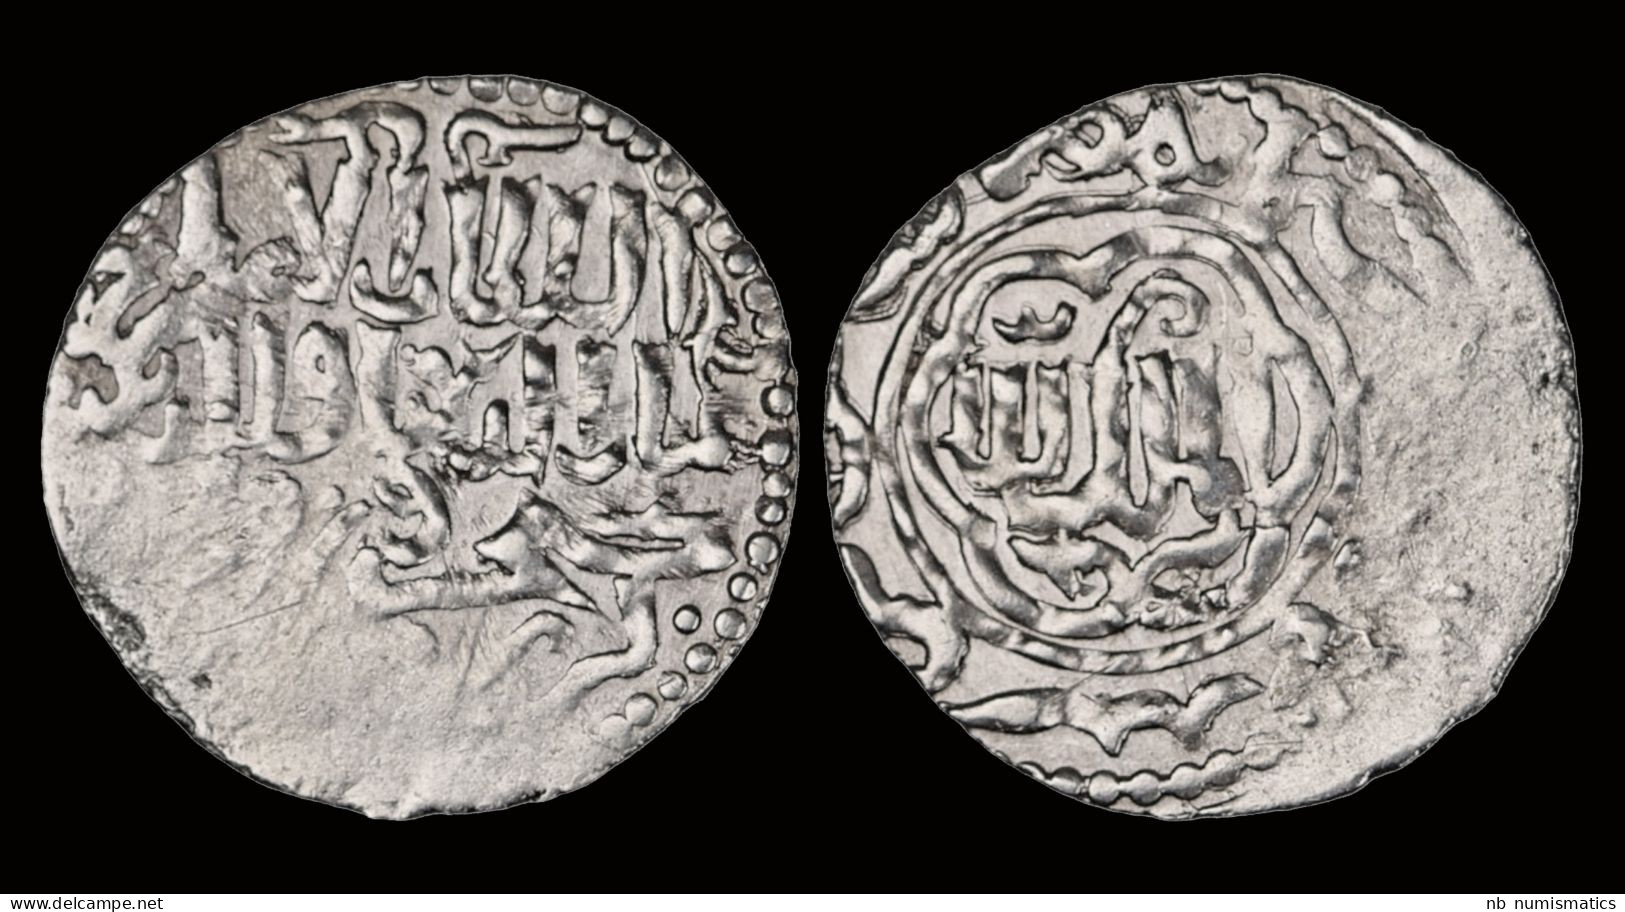 Islamic Seljuq Of Rum Ghiyath Al-Din Kaukhusraw III AR Dirham - Islamic